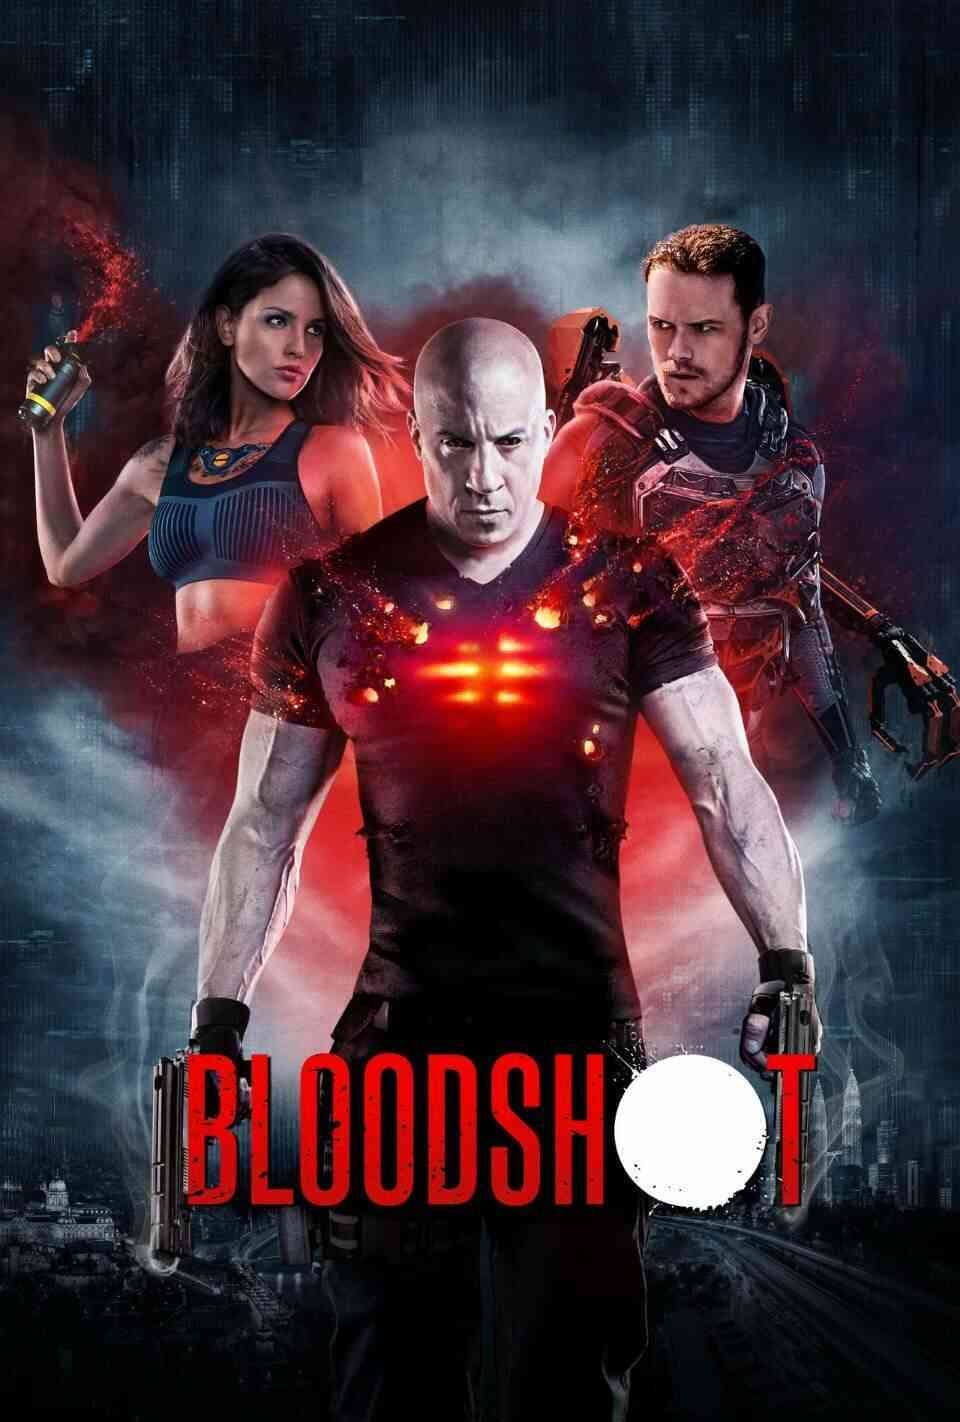 Read Bloodshot screenplay (poster)